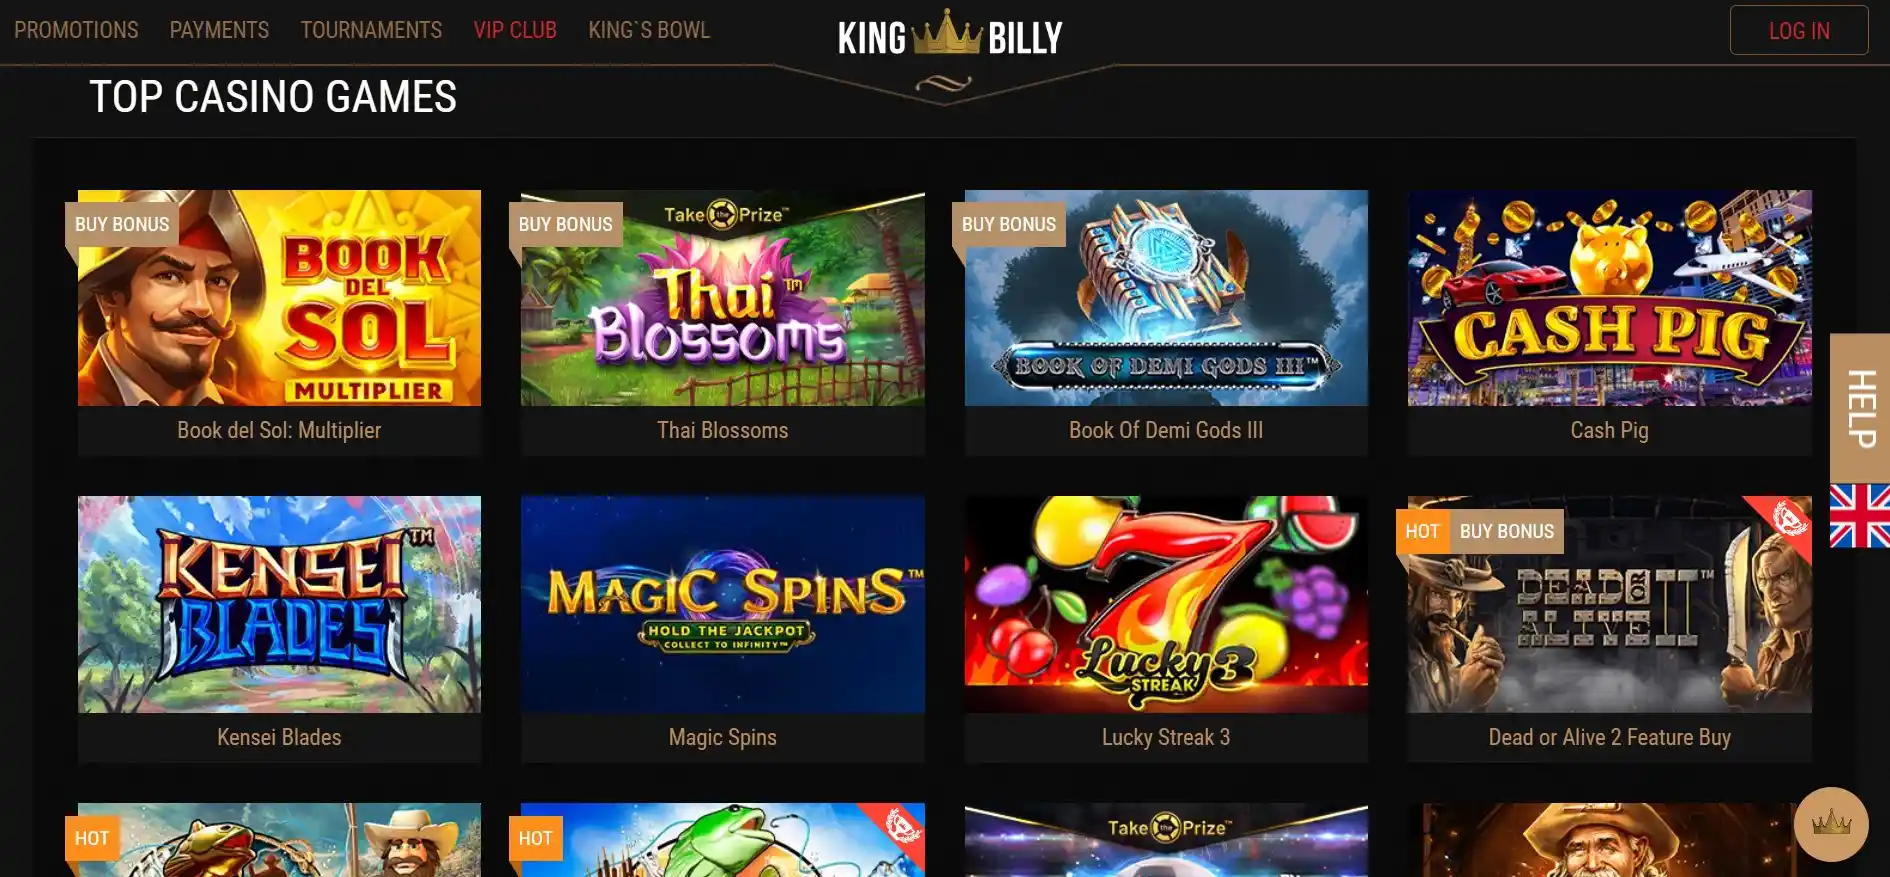 King Billy online slot machines